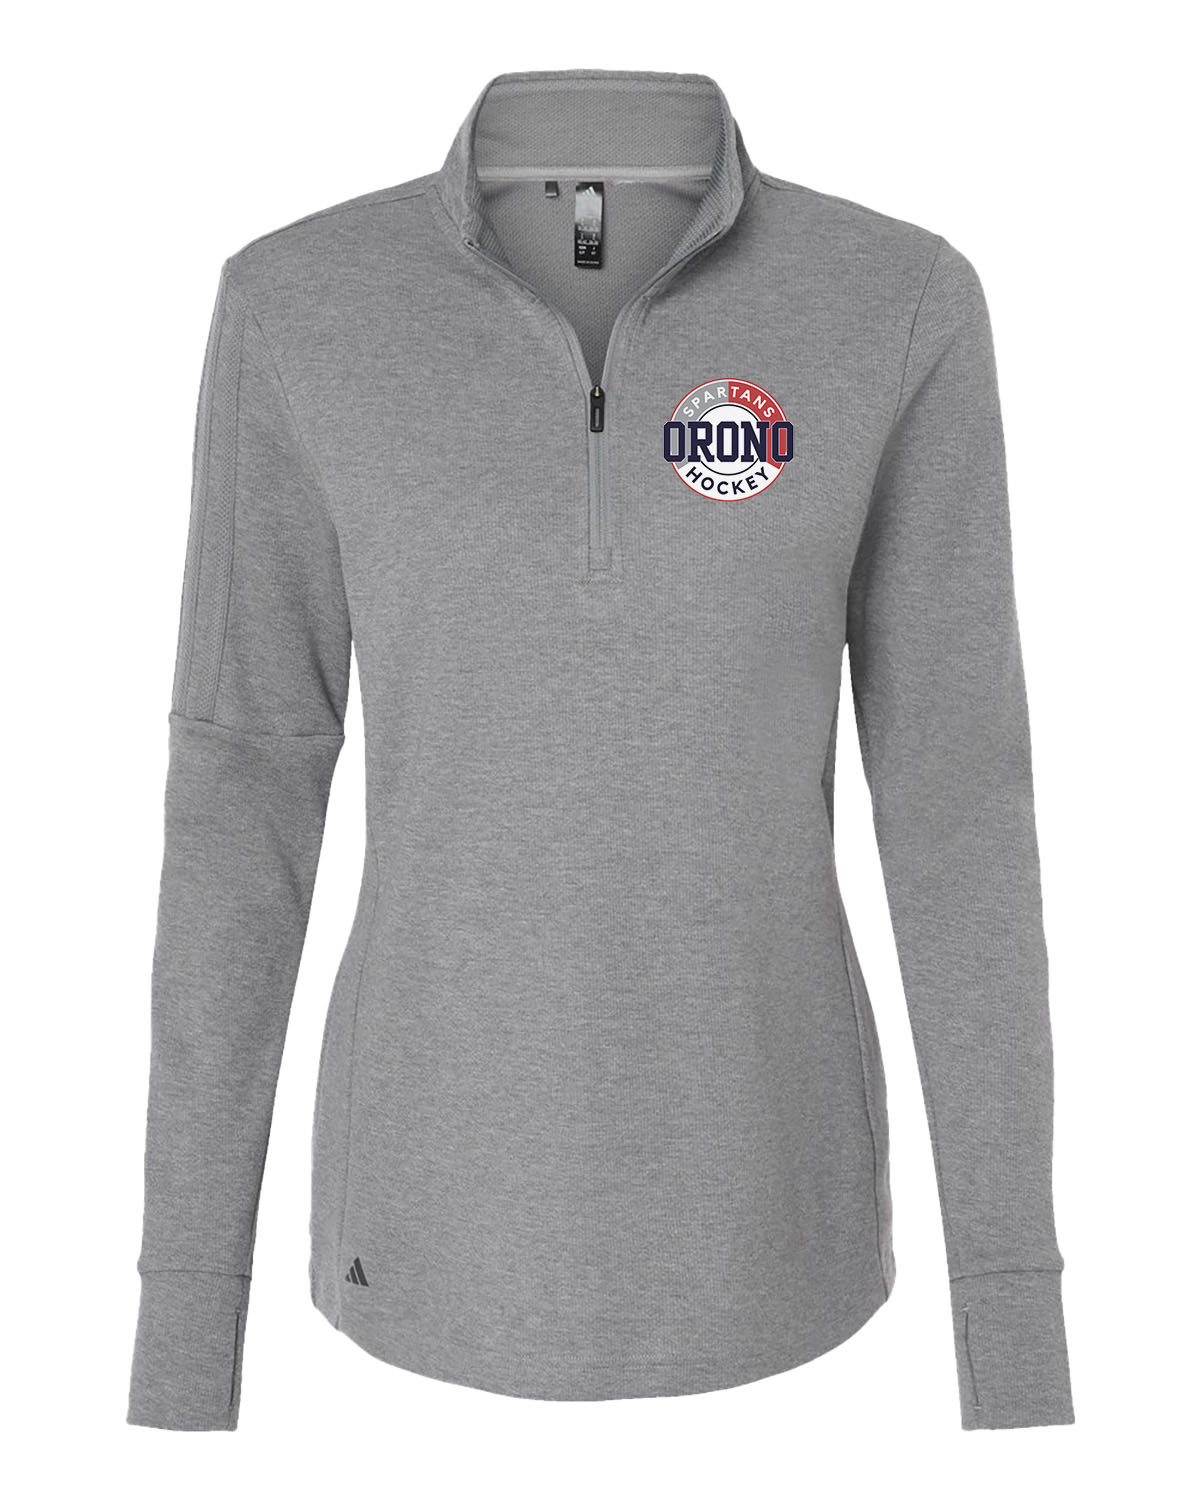 Orono Hockey // Women's Quarter Zip Sweater - Adidas